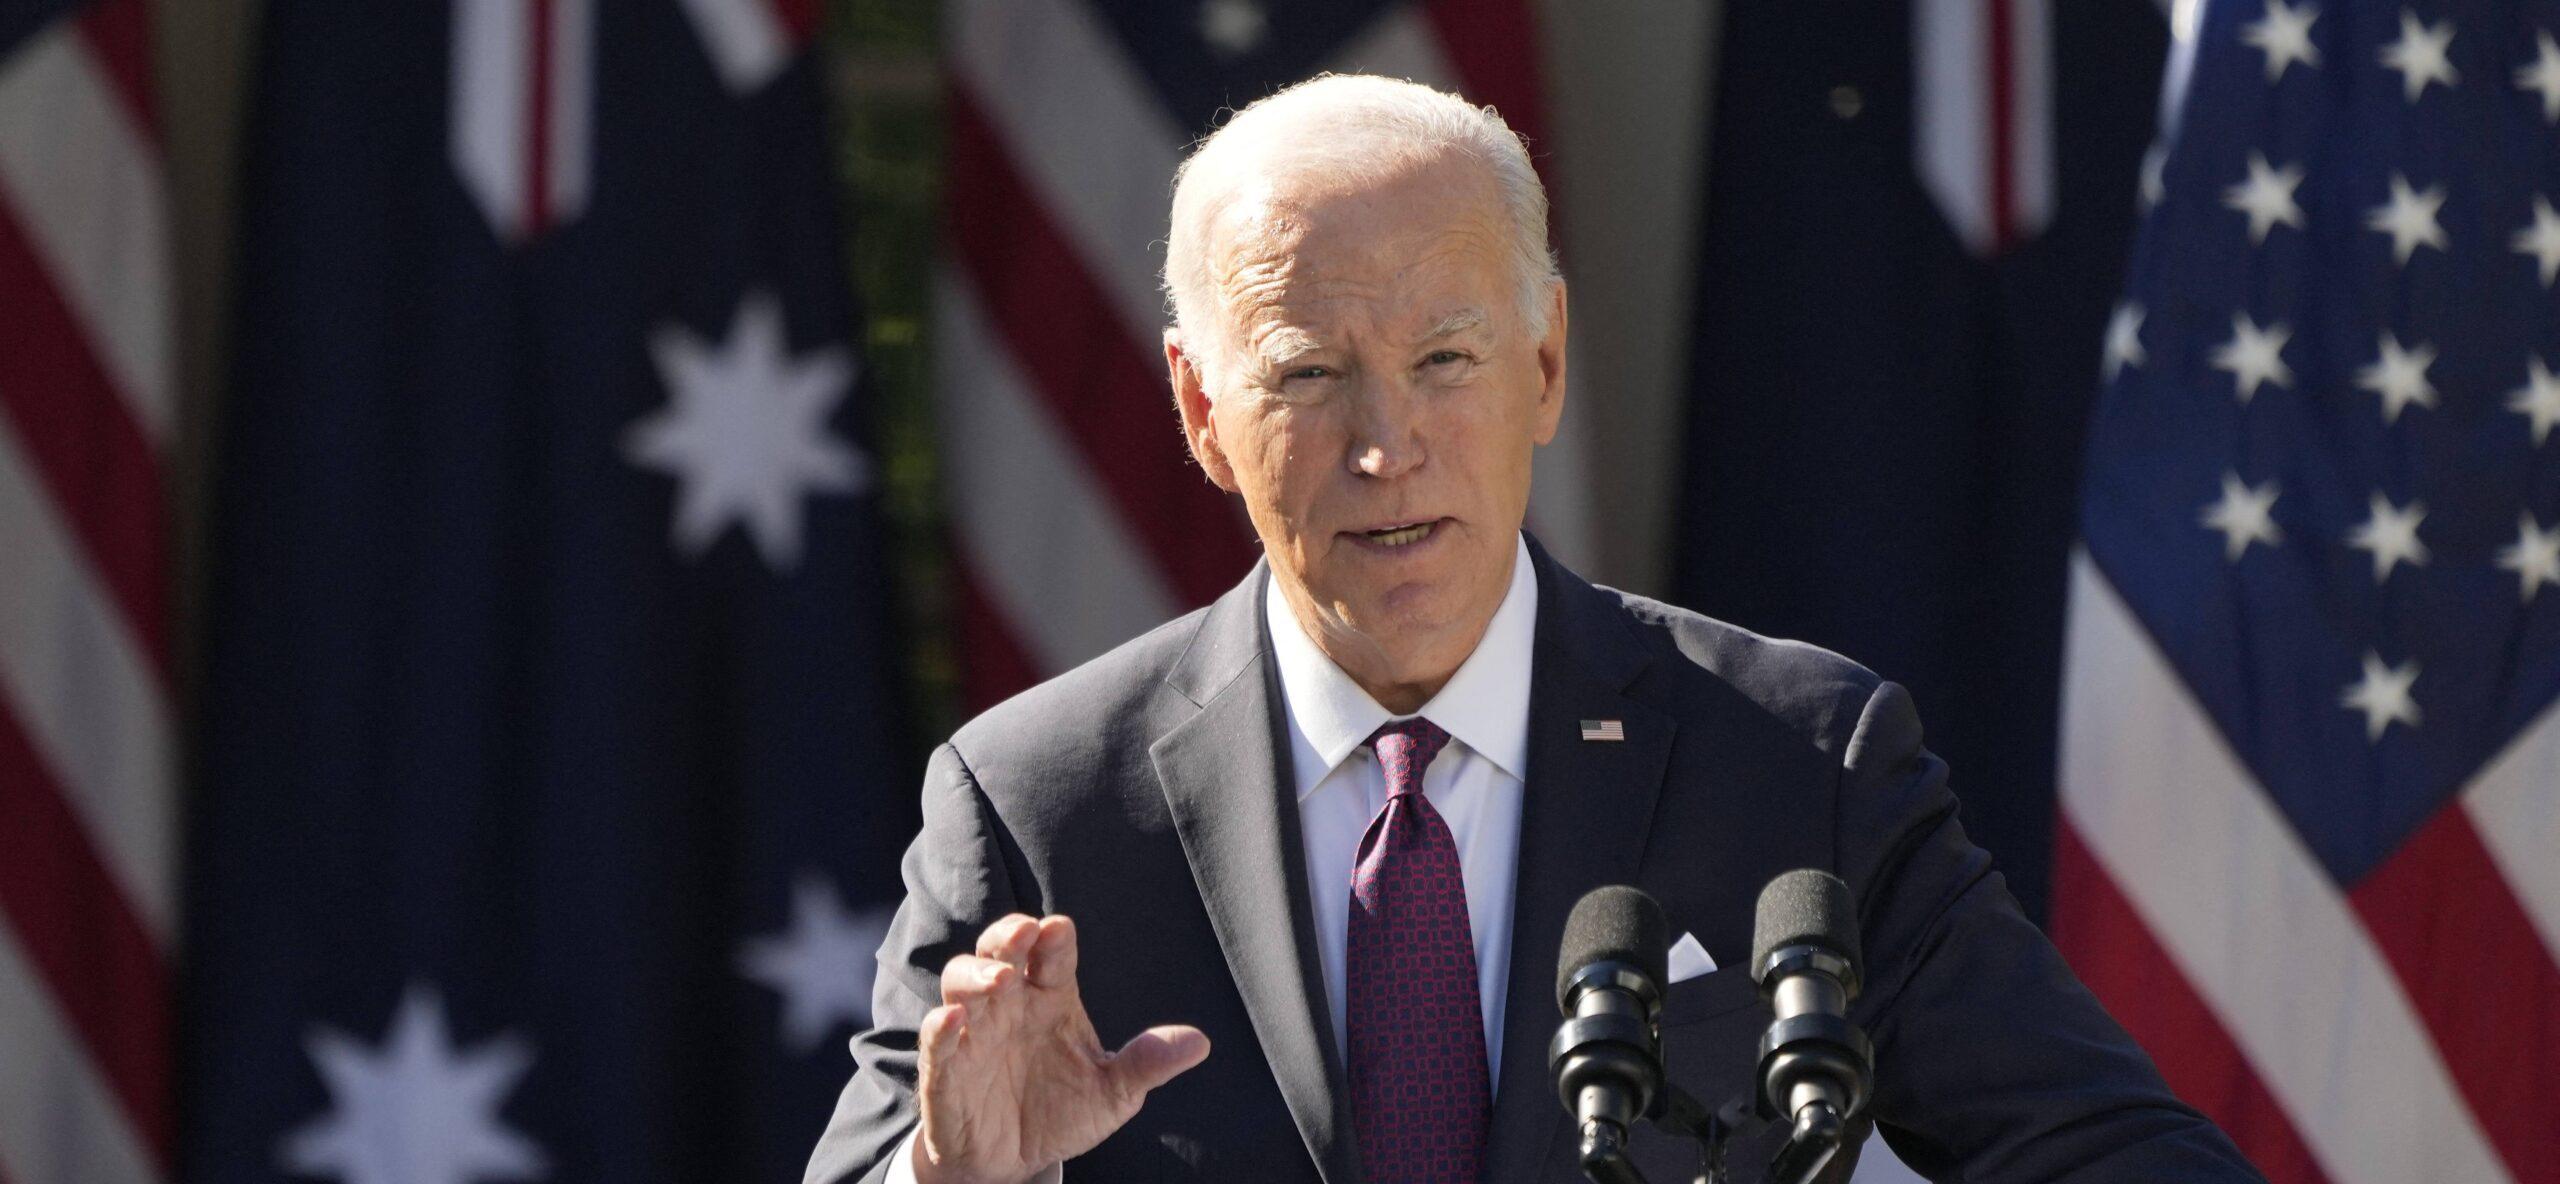 President Joe Biden Breaks His Silence On Maine Mass Shooting